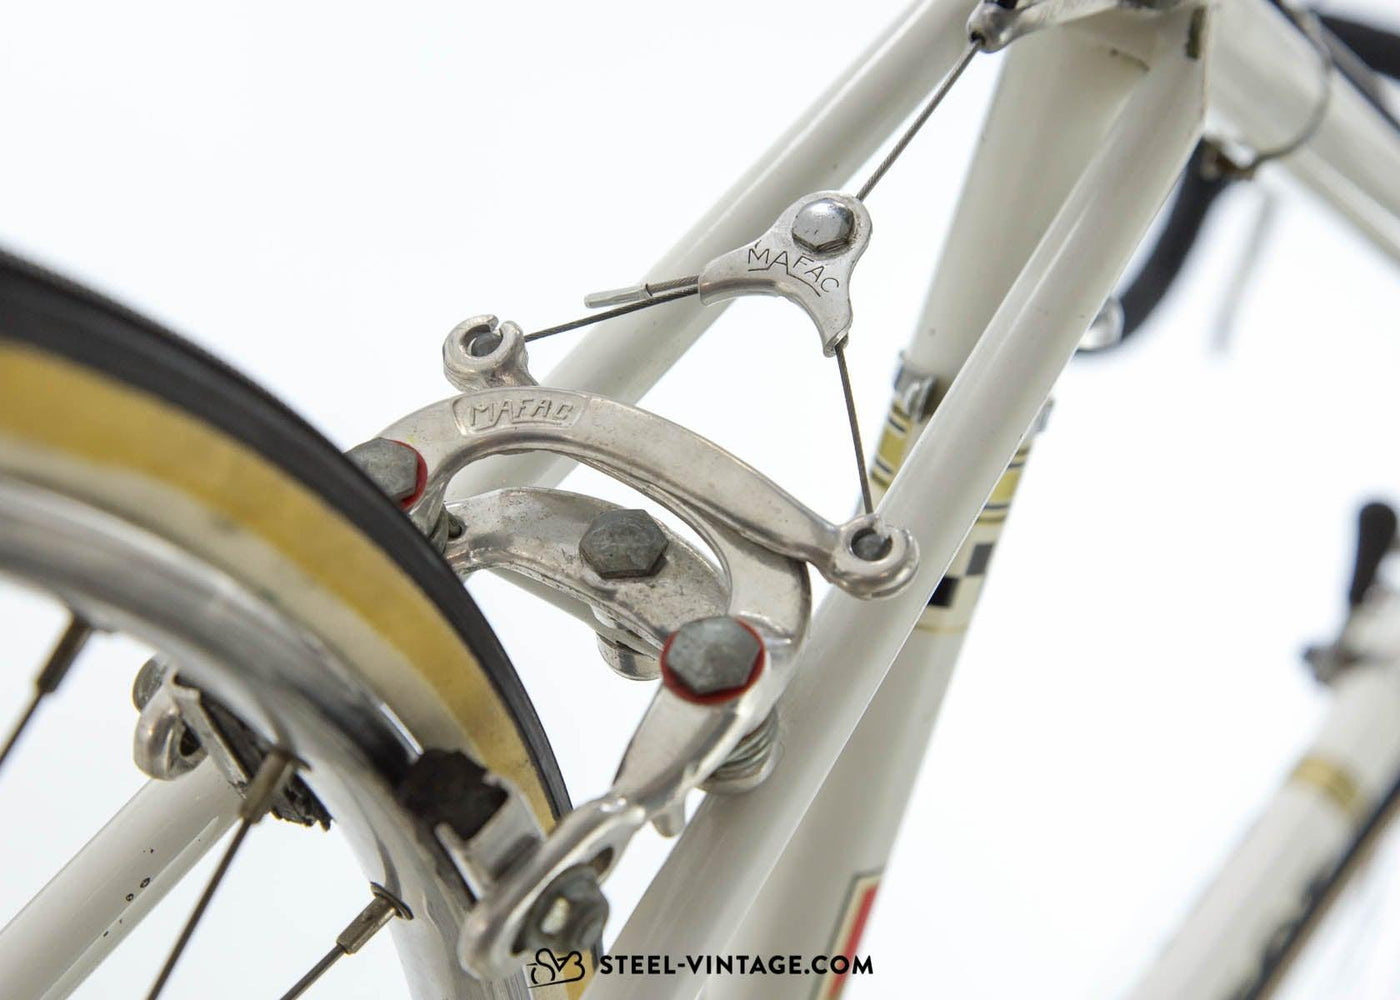 Peugeot PA-10 Classic Road Bike 1970s - Steel Vintage Bikes